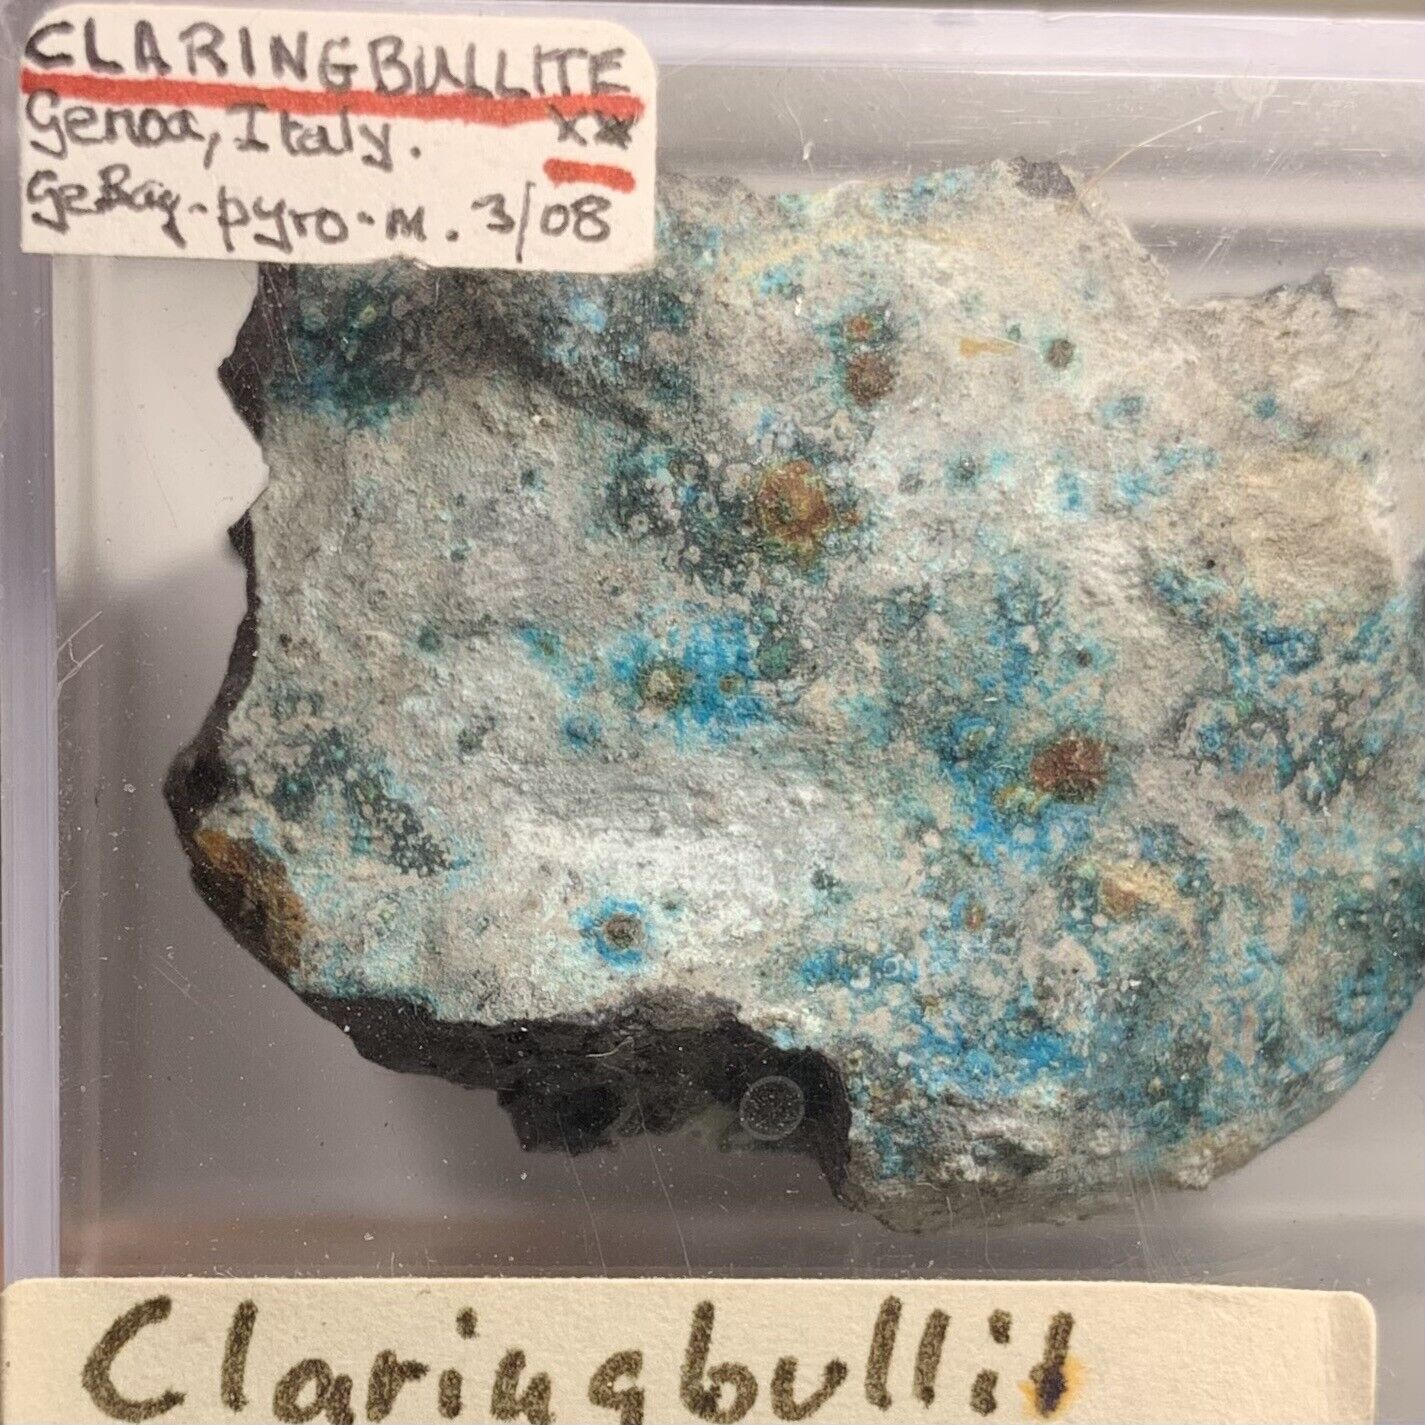 Claringbullite Crystal Micro Val Vereūa Geuva Ligurieu ITALY